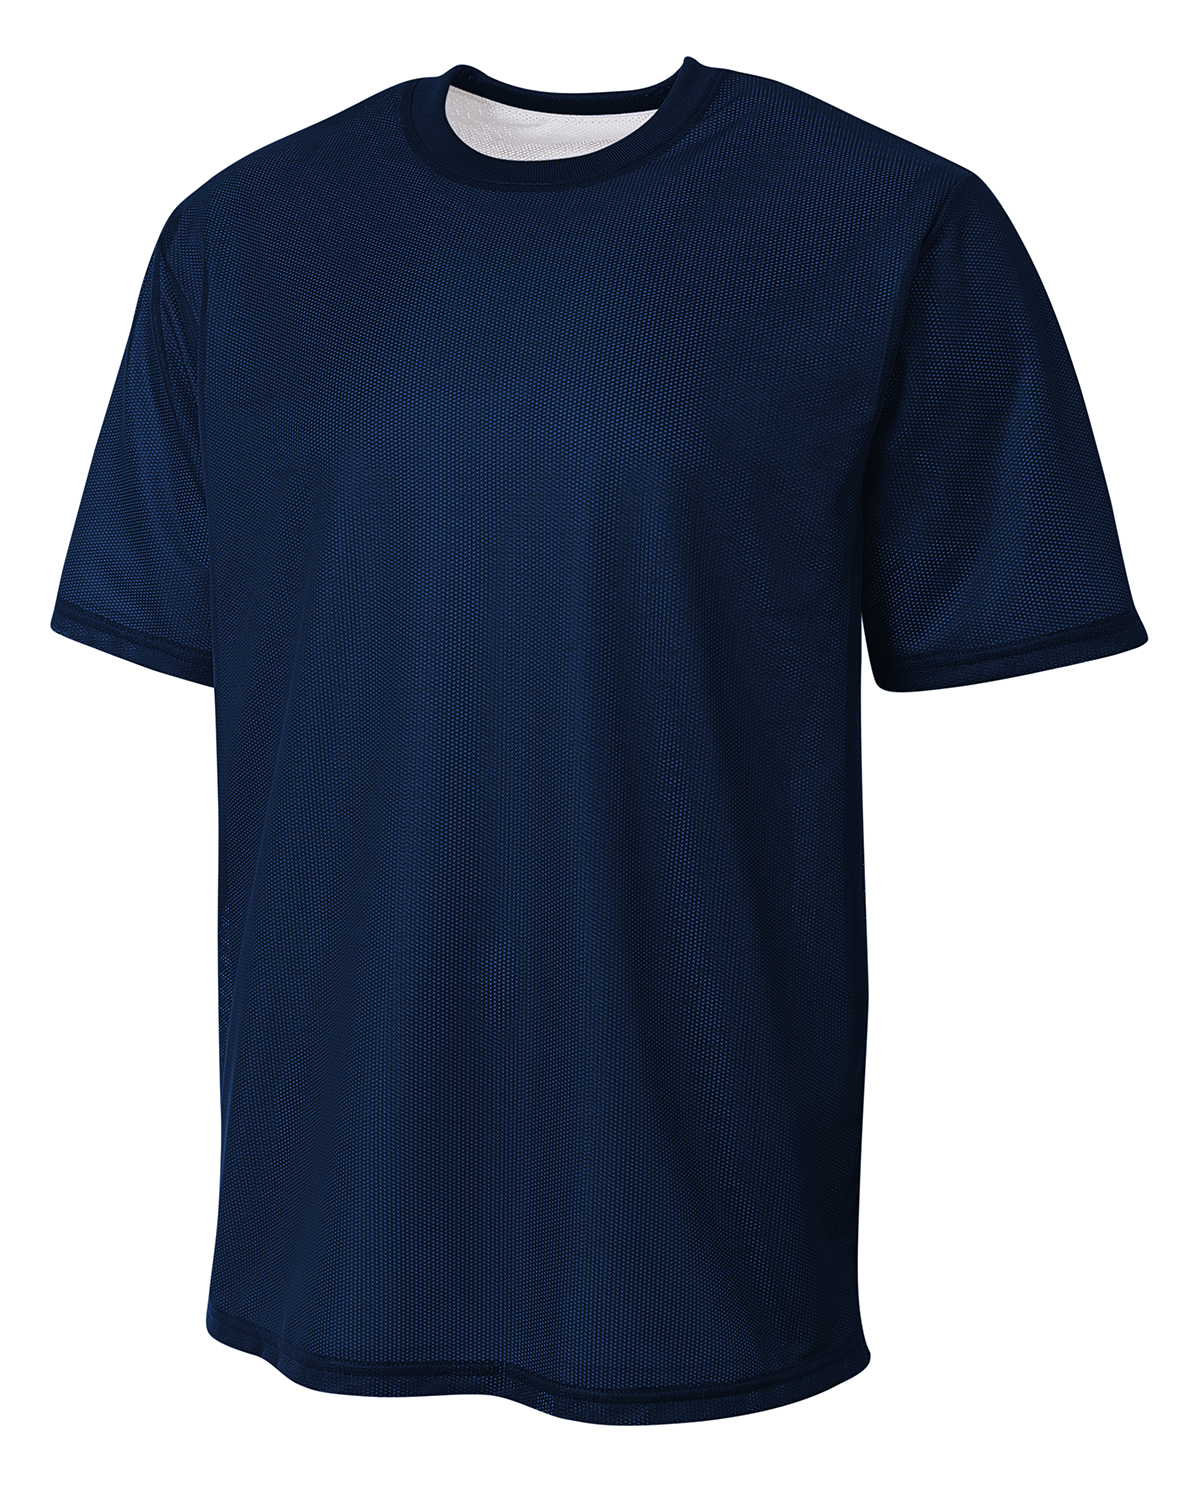 T Shirts | Fast & Free Shipping At $59 | Jiffy